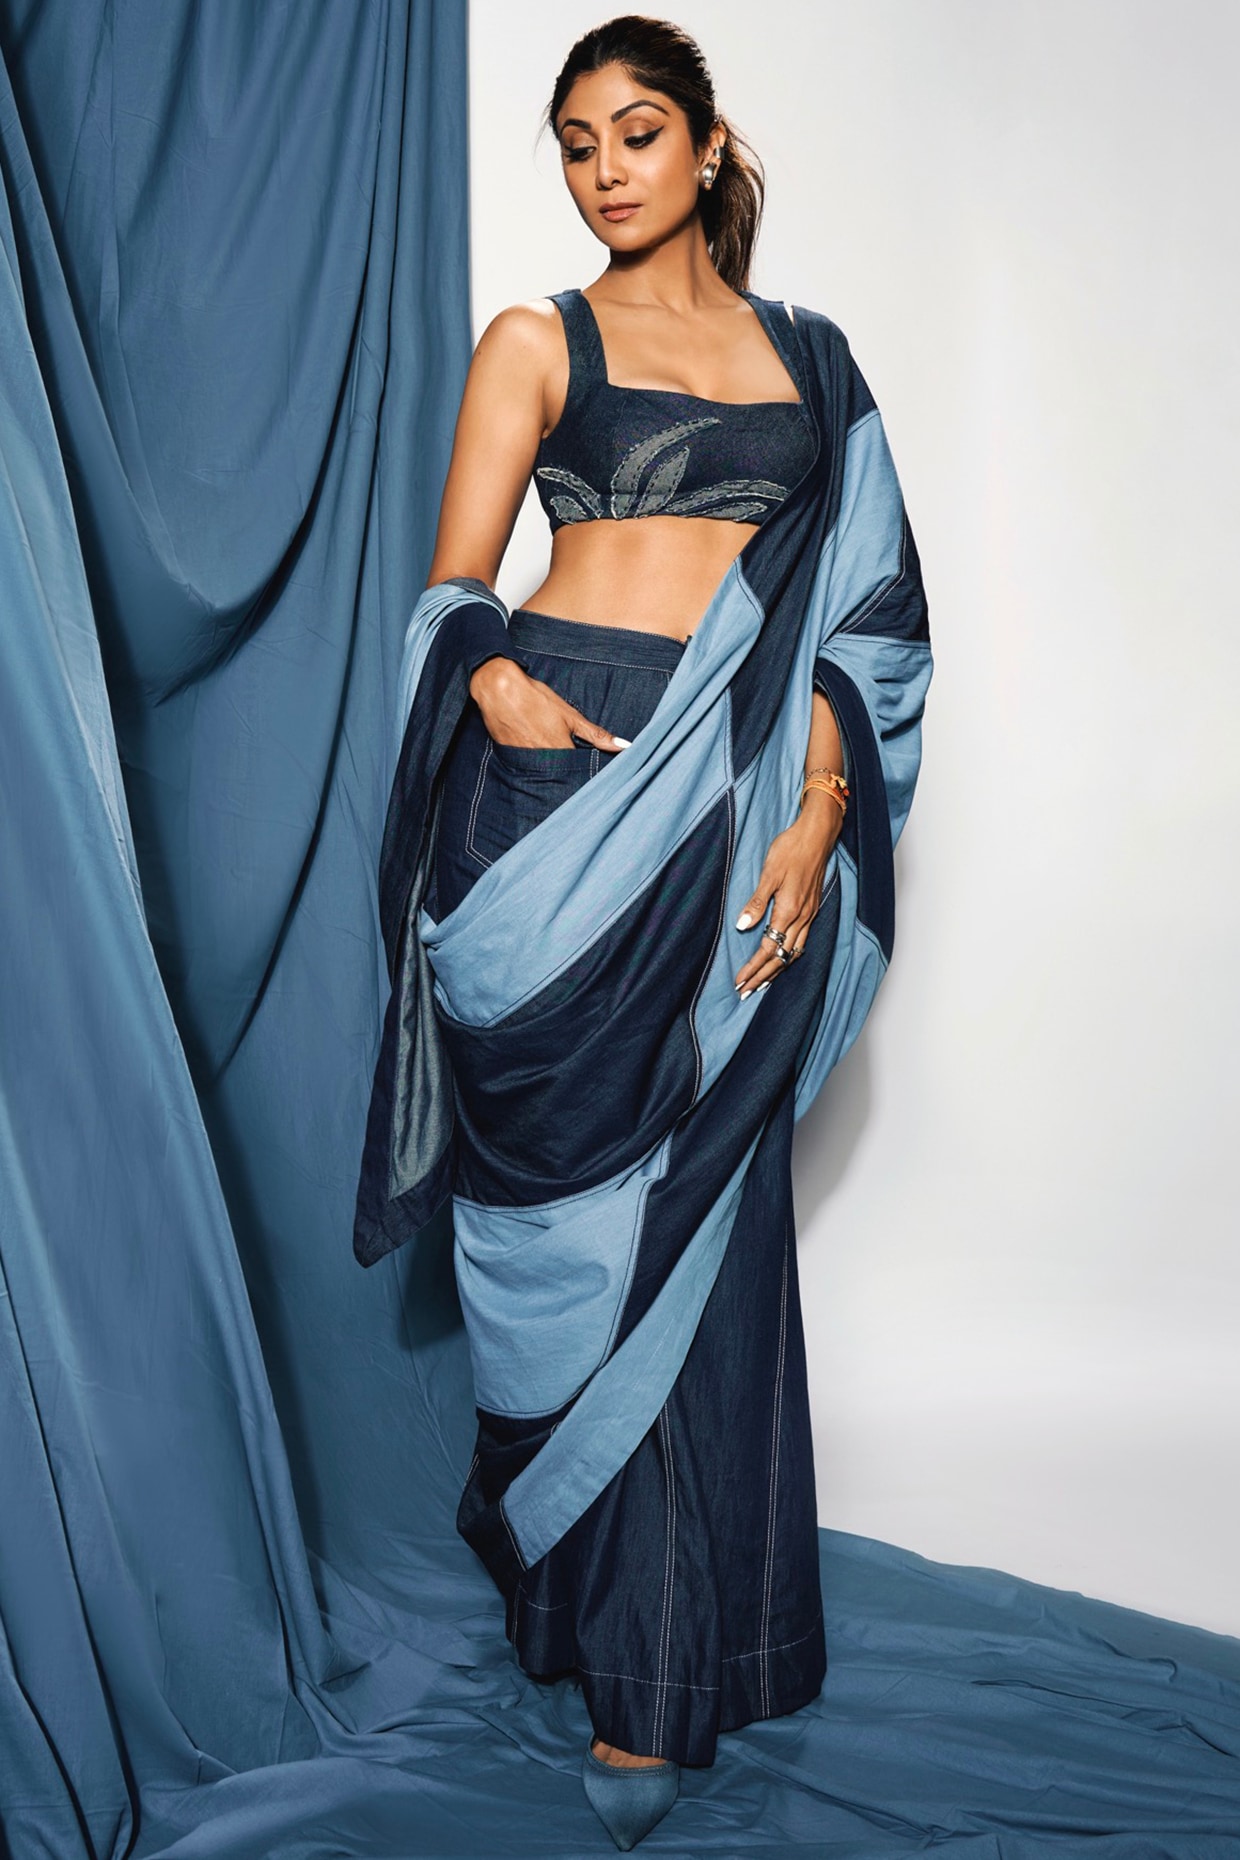 Sari with denim jacket | Designer saree blouse patterns, Indian saree  blouses designs, Saree wearing styles